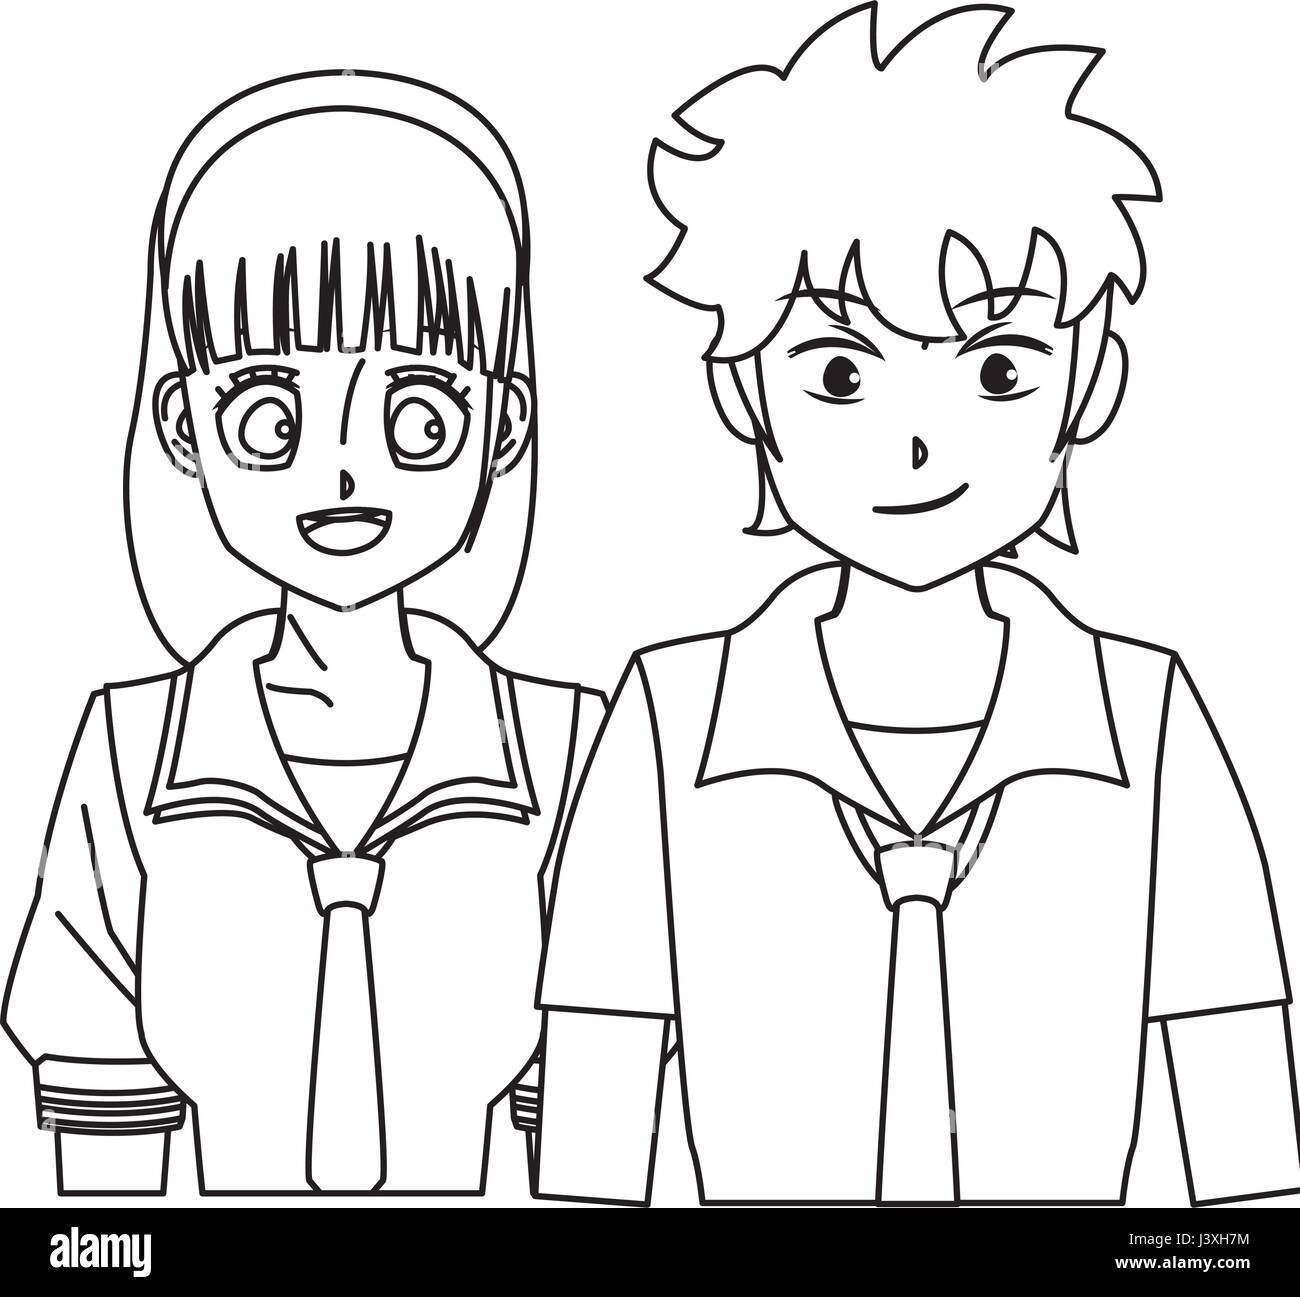 anime boy and girl with guns by flashtheteddy on DeviantArt